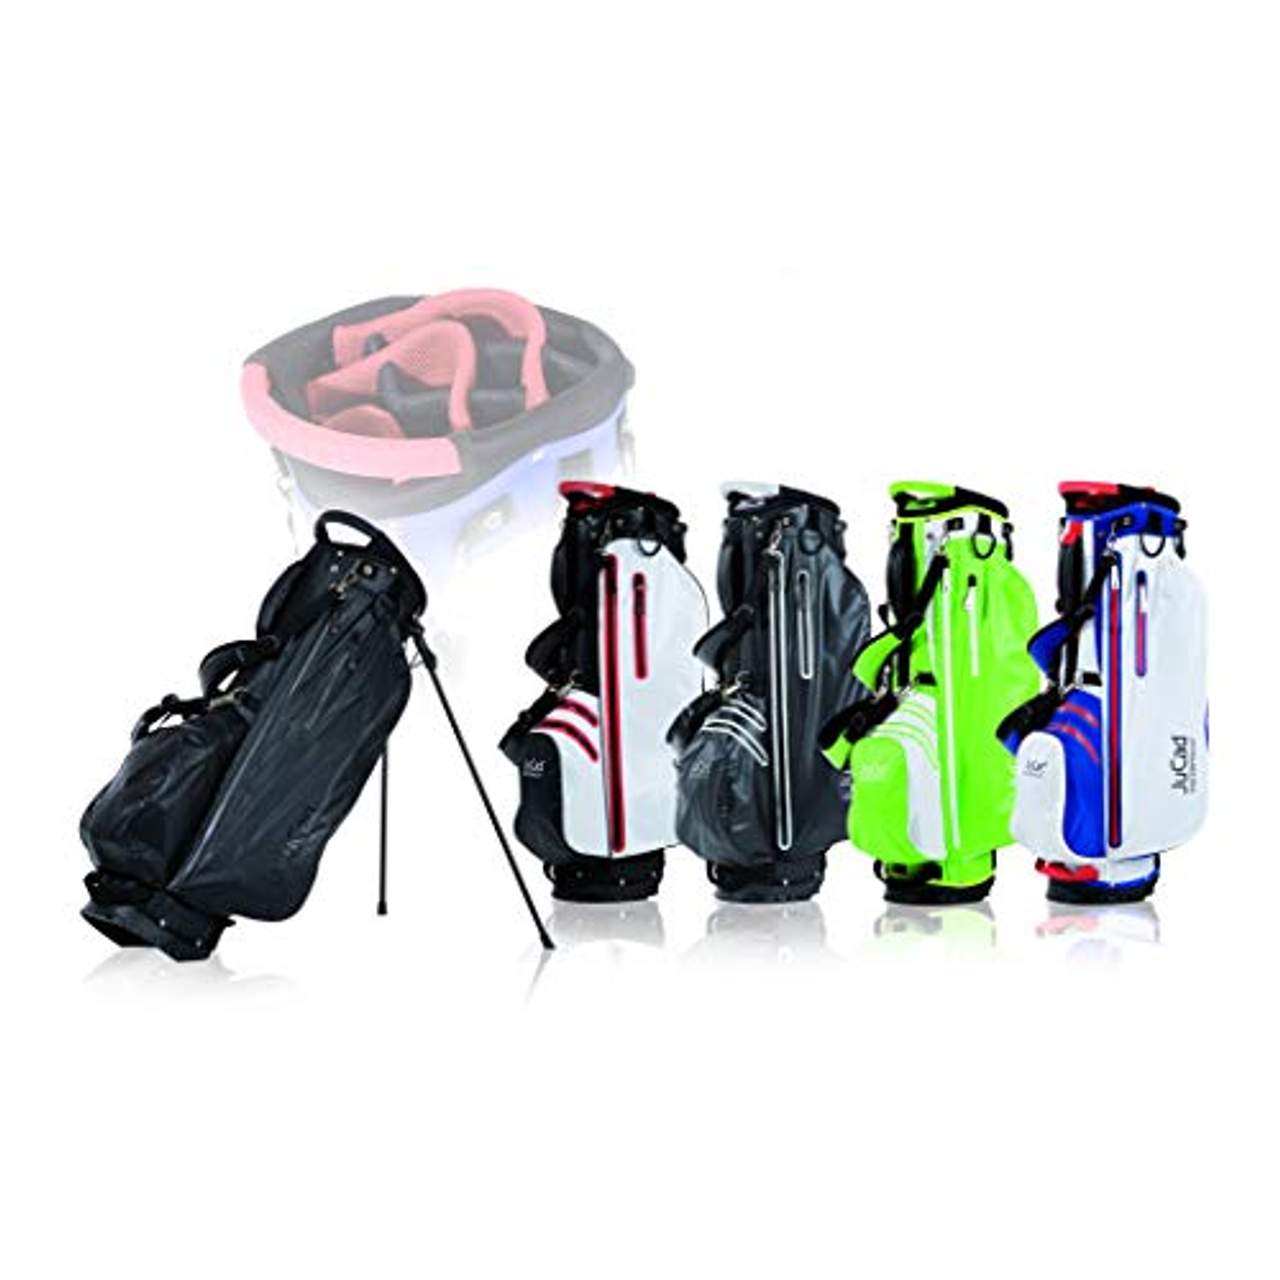 JuCad Bag 2 in 1 Waterproof I Wasserdicht I Tragebag I Cartbag I Golf I Tasche